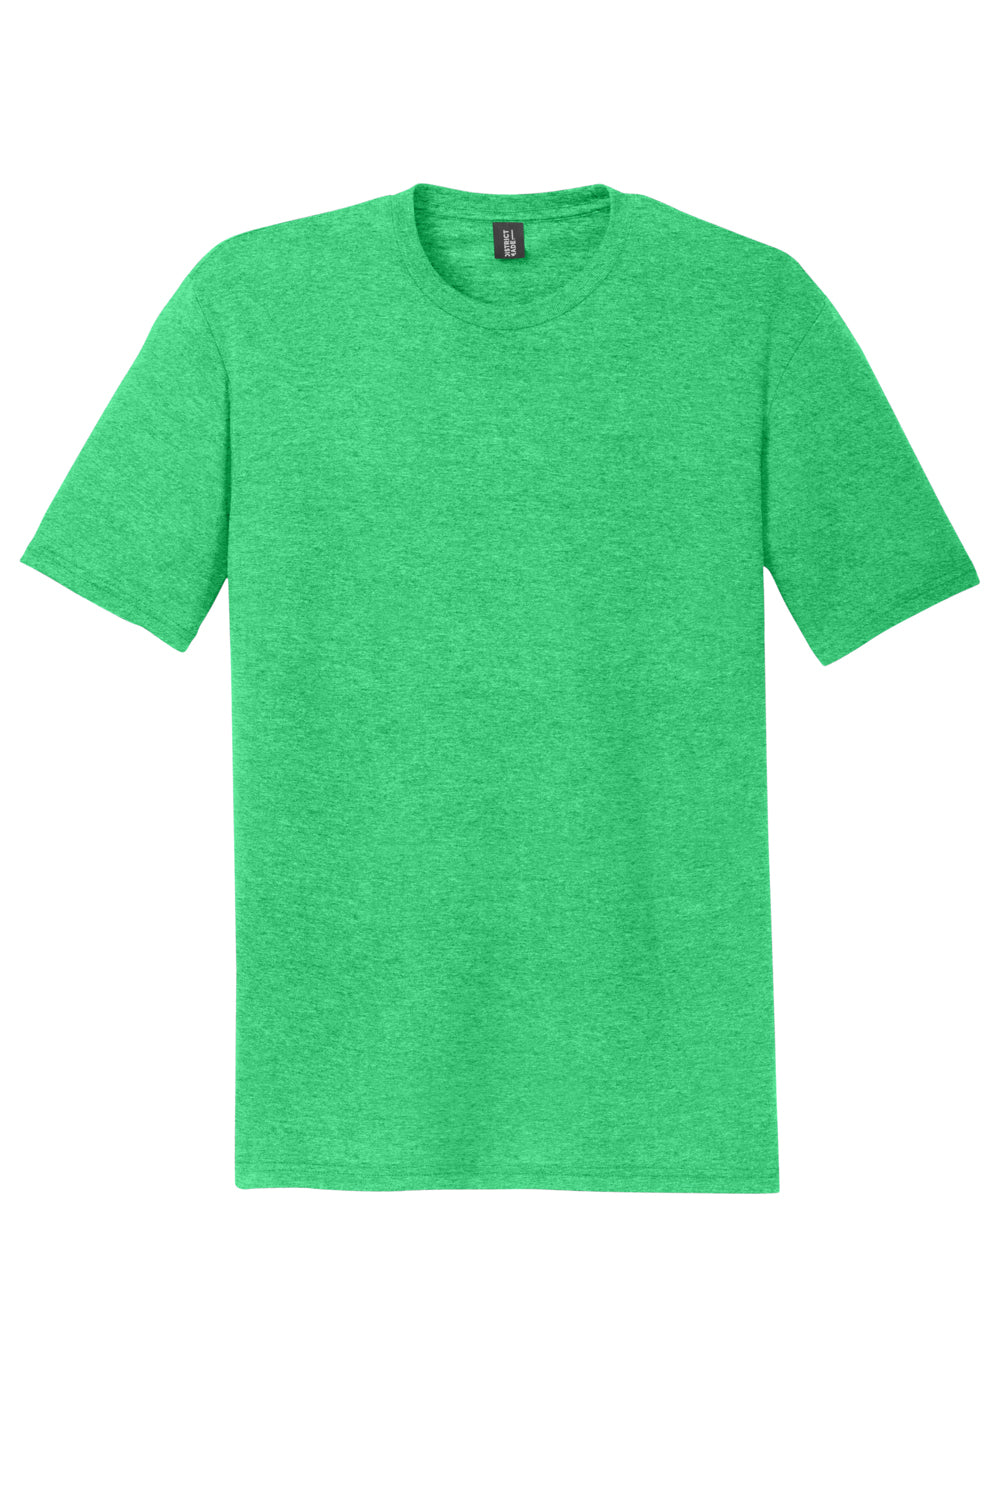 District DM130DTG Mens Perfect DTG Short Sleeve Crewneck T-Shirt Green Frost Flat Front